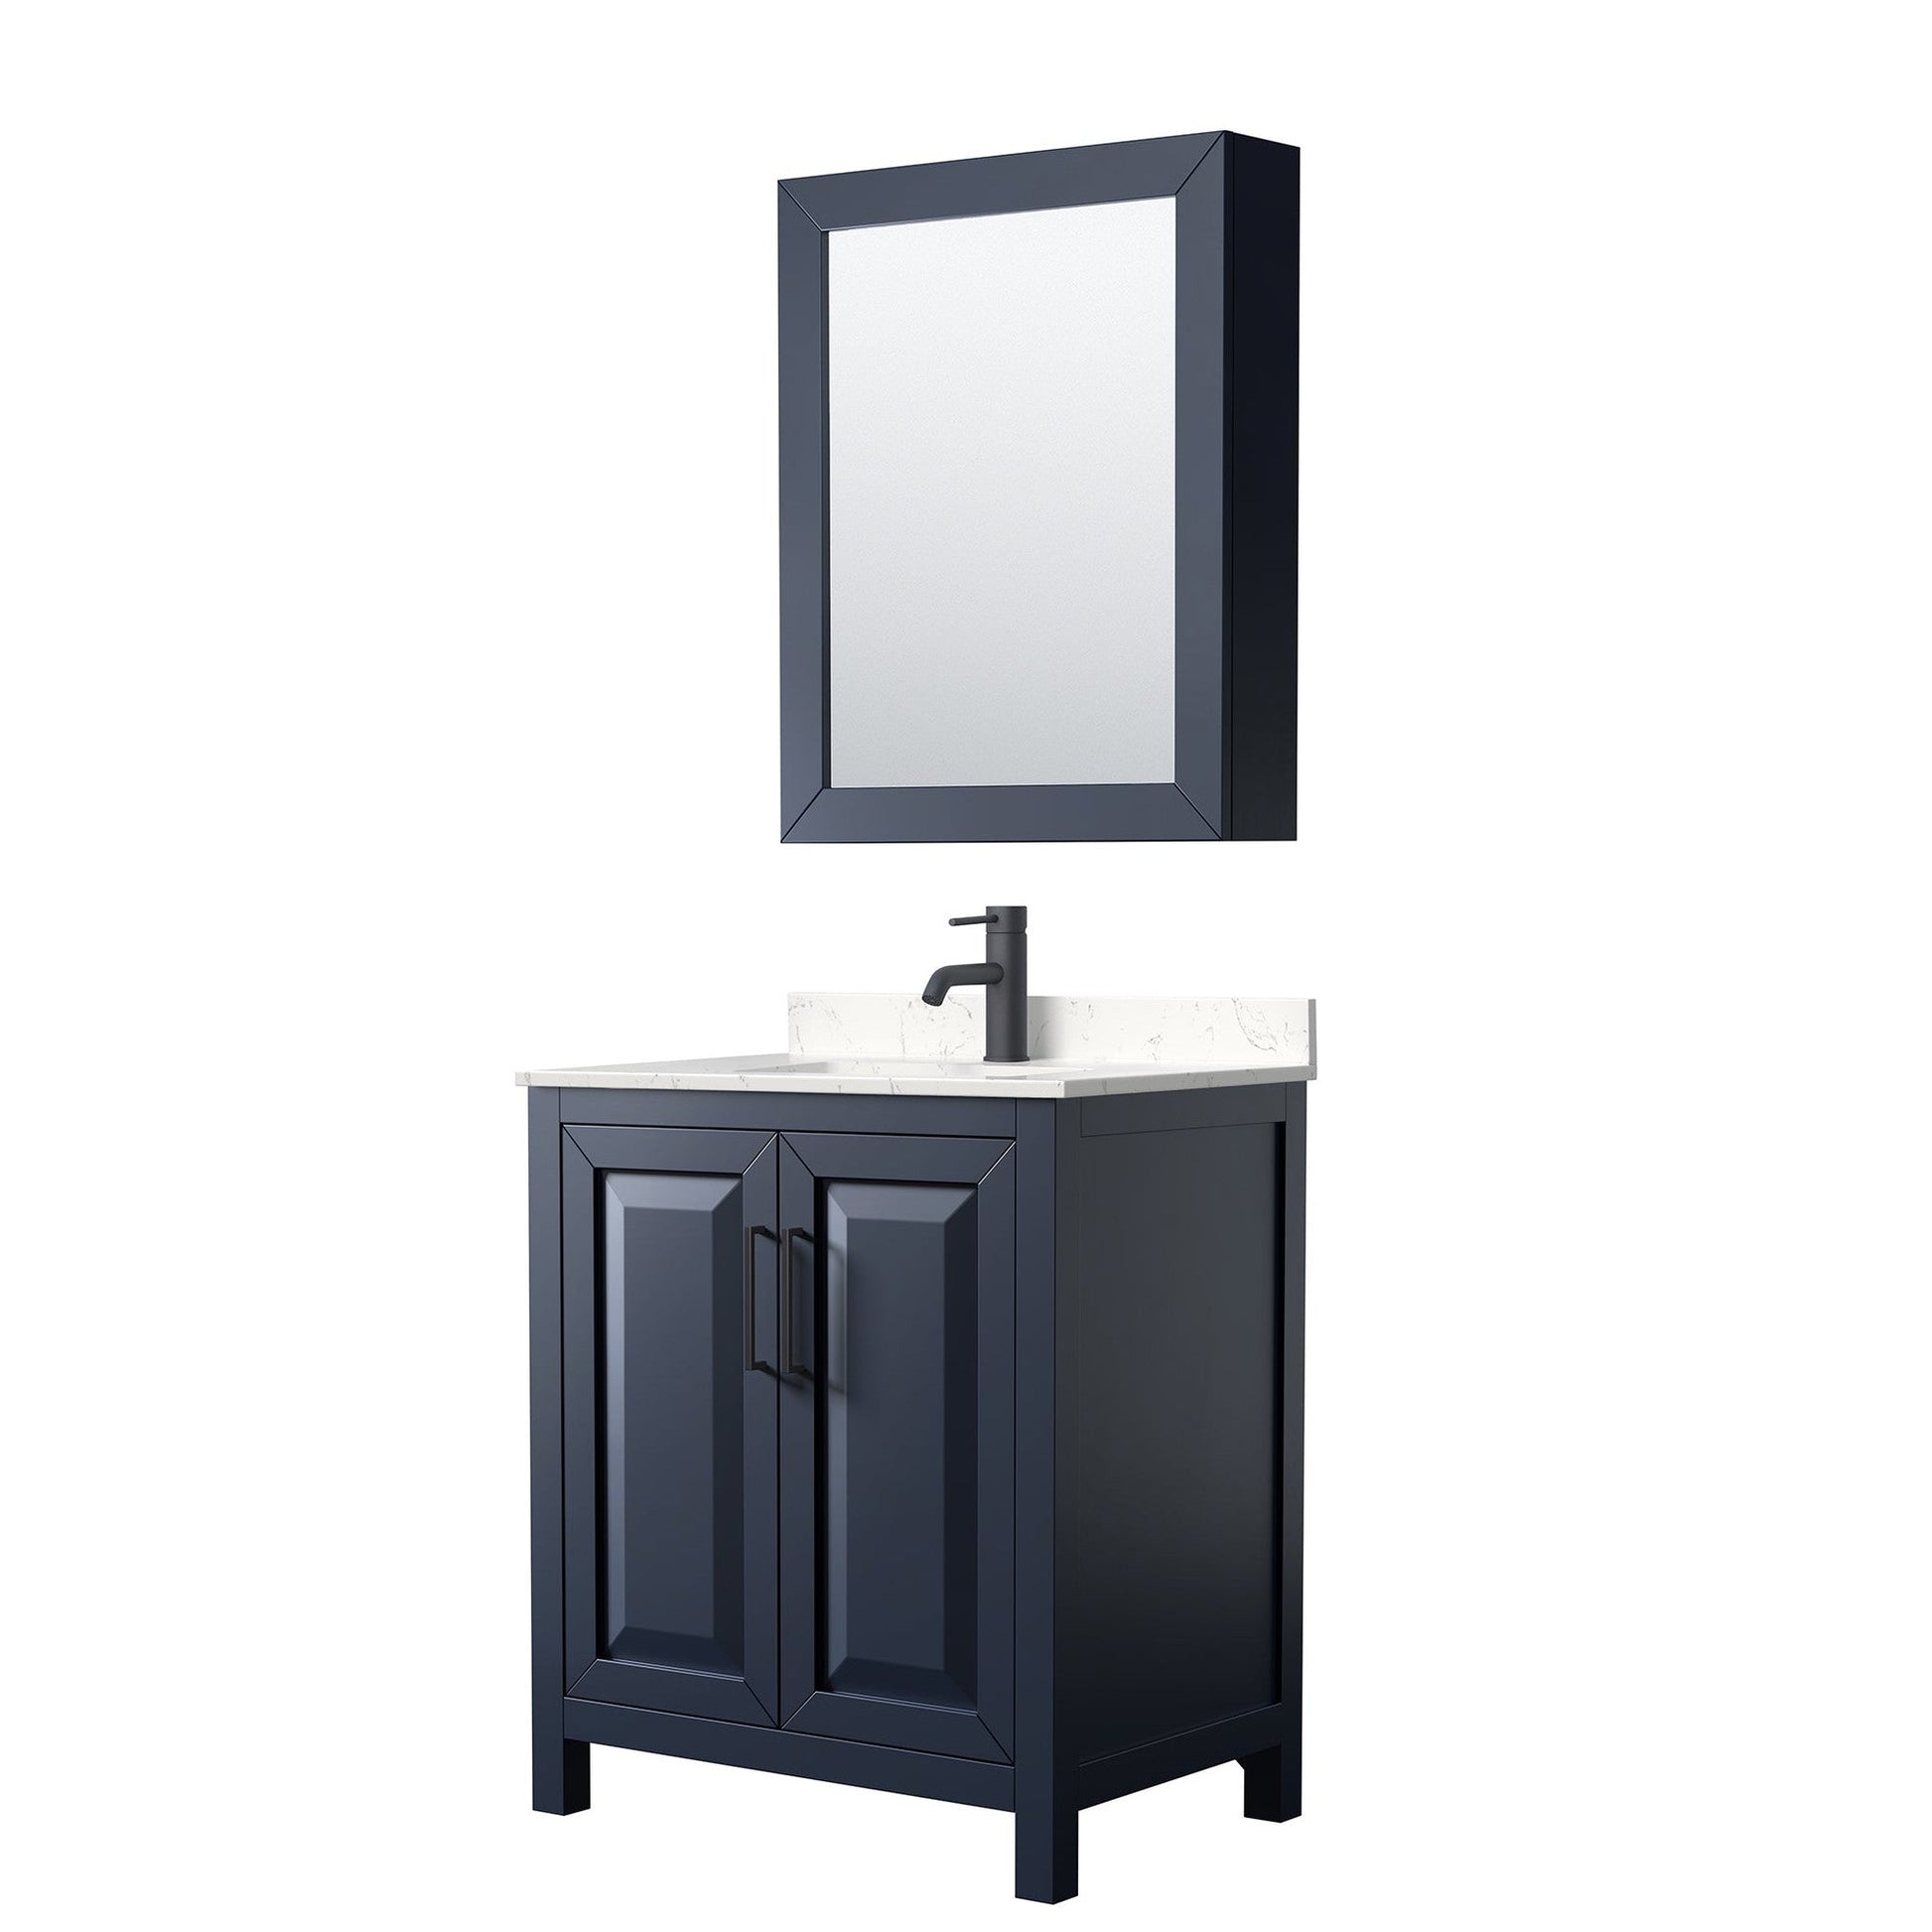 Daria 30" Single Bathroom Vanity in Dark Blue, Carrara Cultured Marble Countertop, Undermount Square Sink, Matte Black Trim, Medicine Cabinet